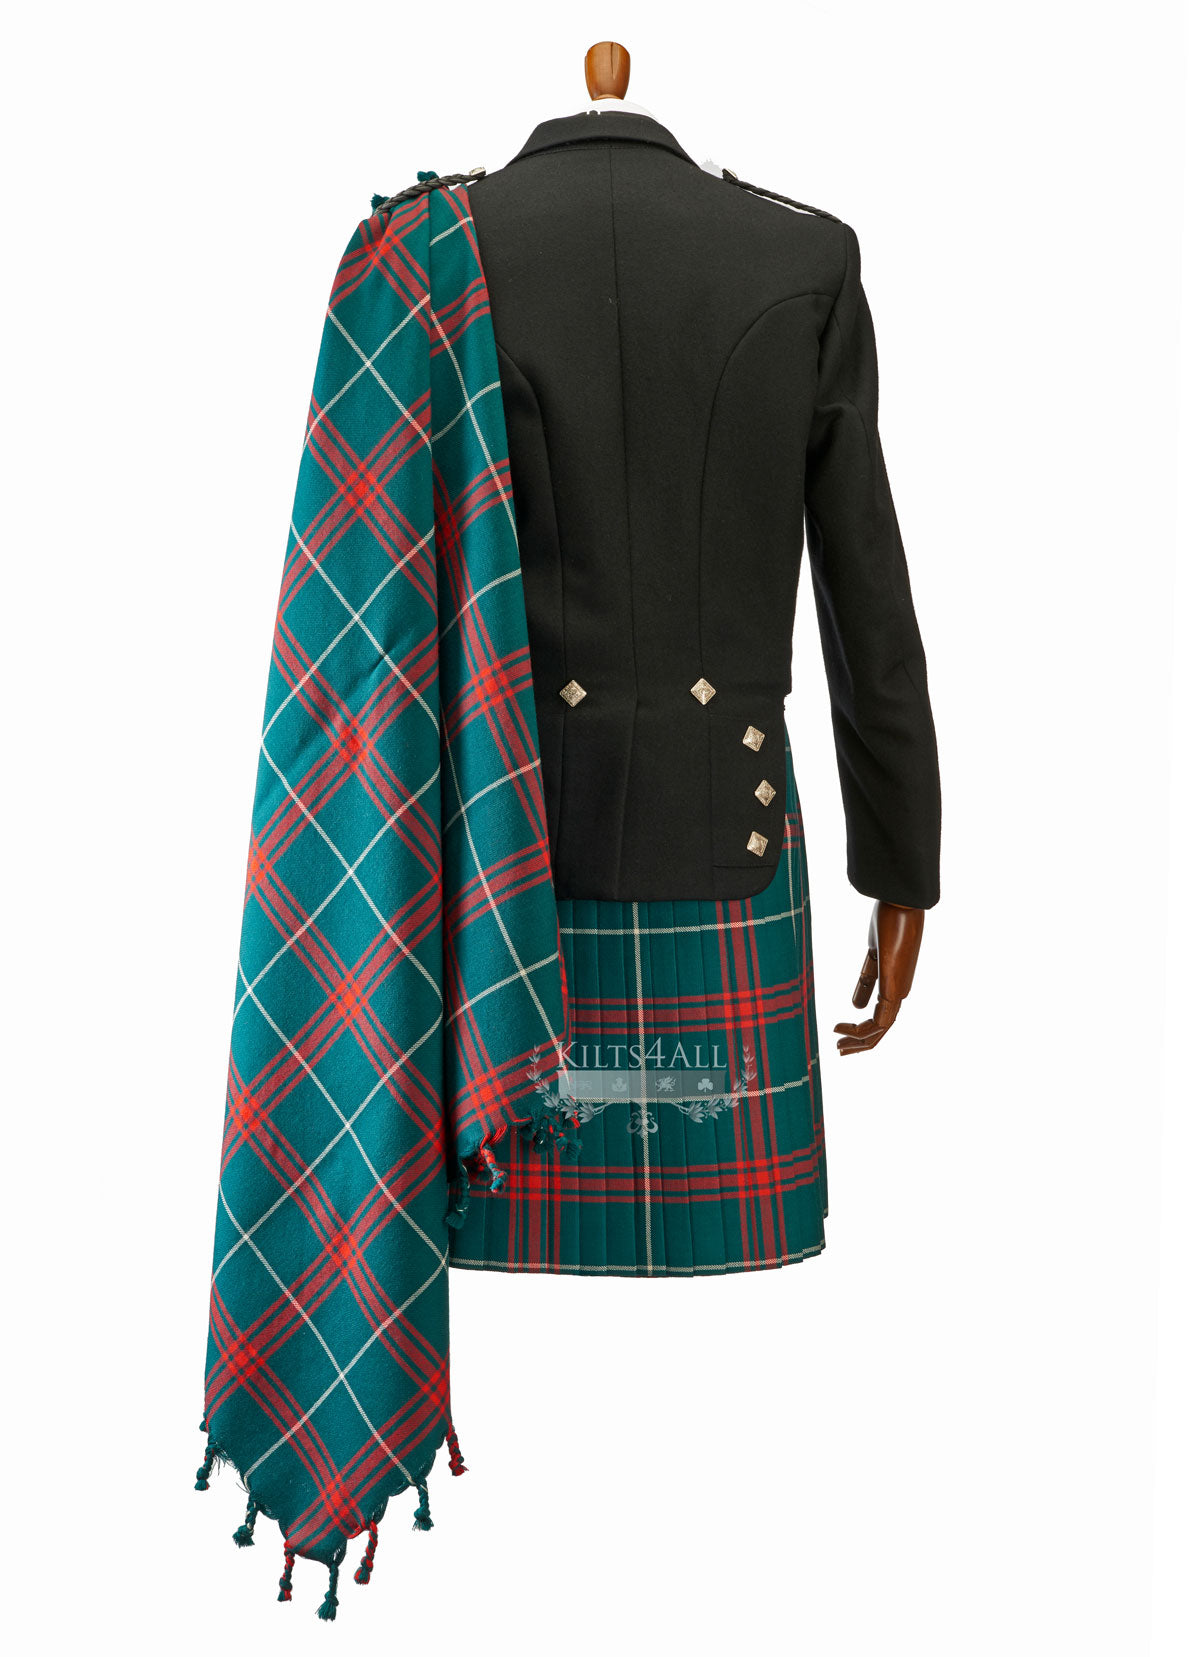 Mens Welsh National Tartan Kilt Outfit to Hire - Lightweight Charcoal Tweed Argyll Jacket & Waistcoat